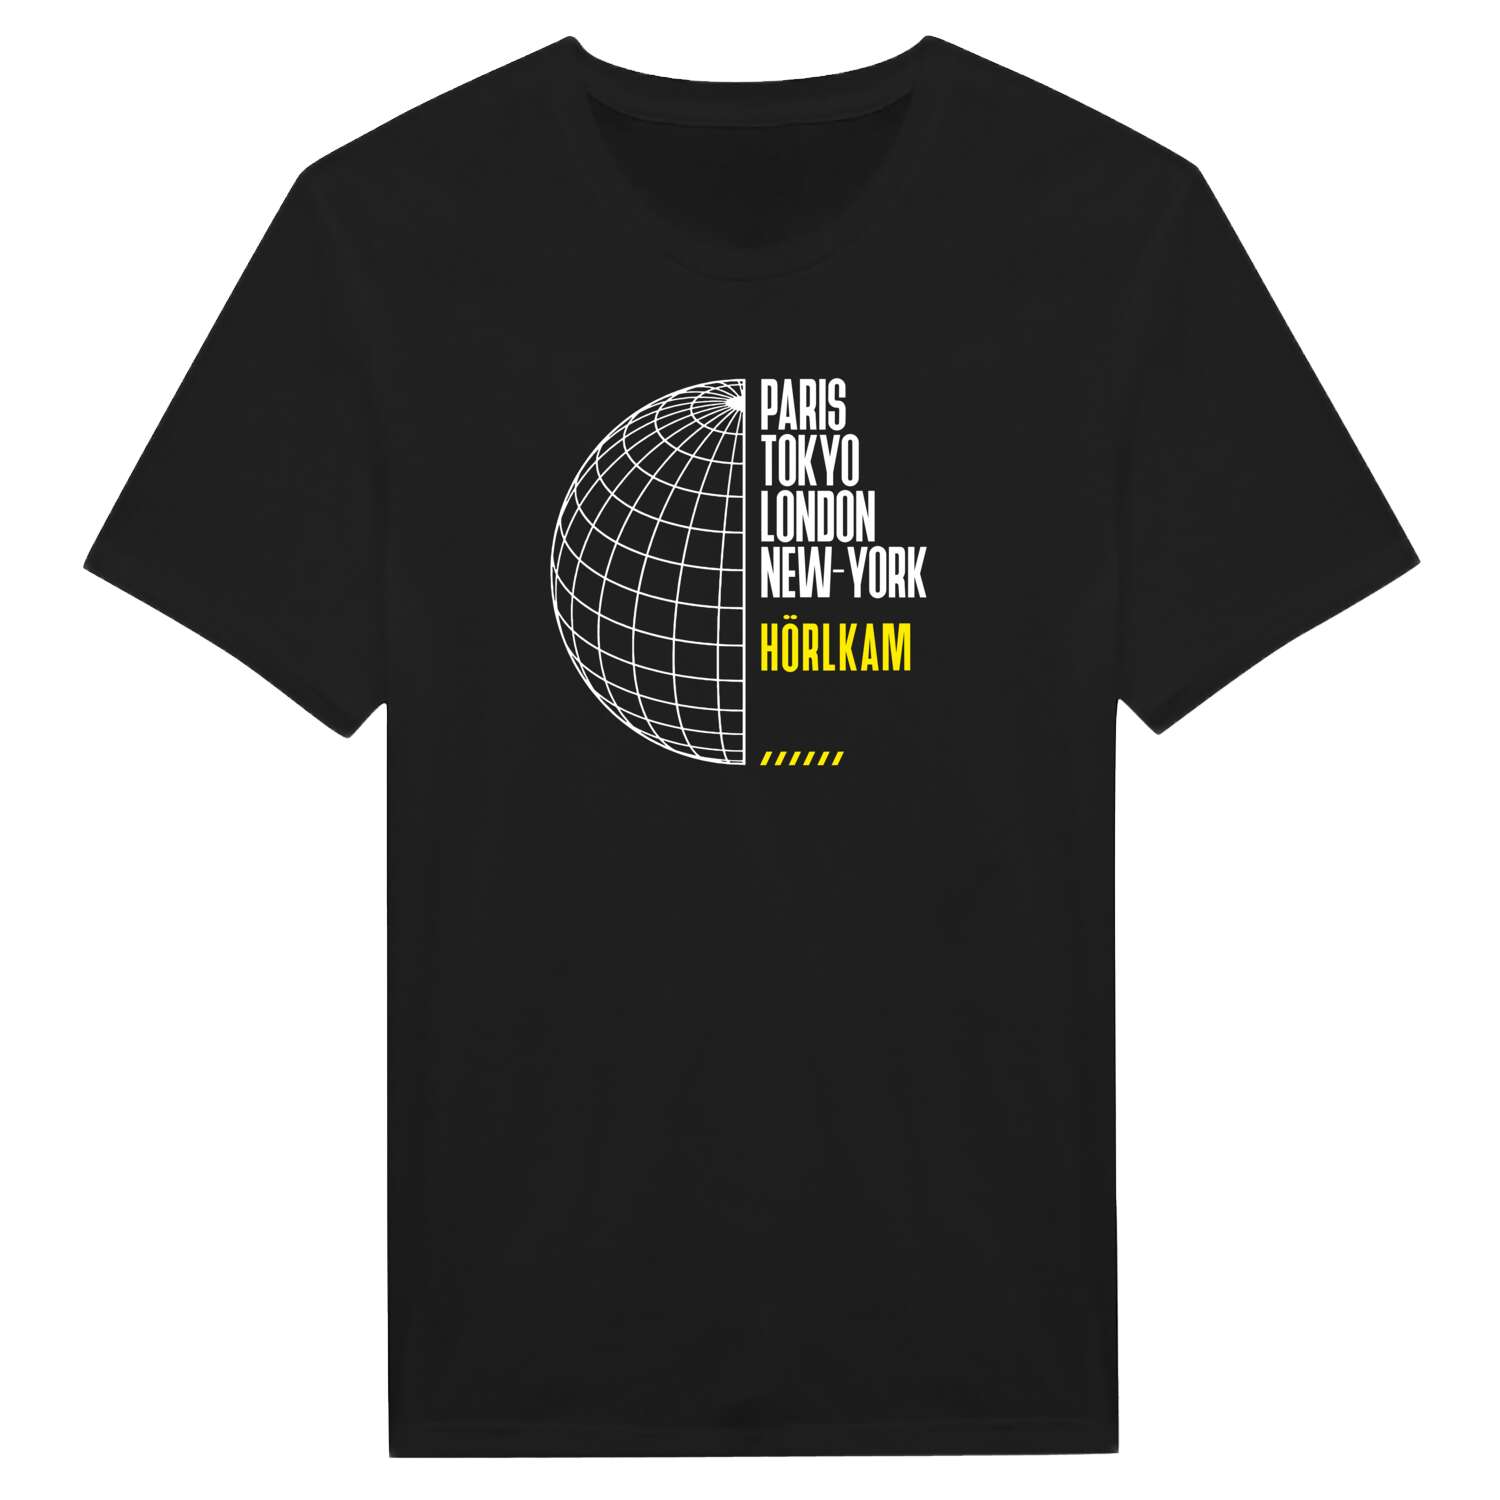 Hörlkam T-Shirt »Paris Tokyo London«